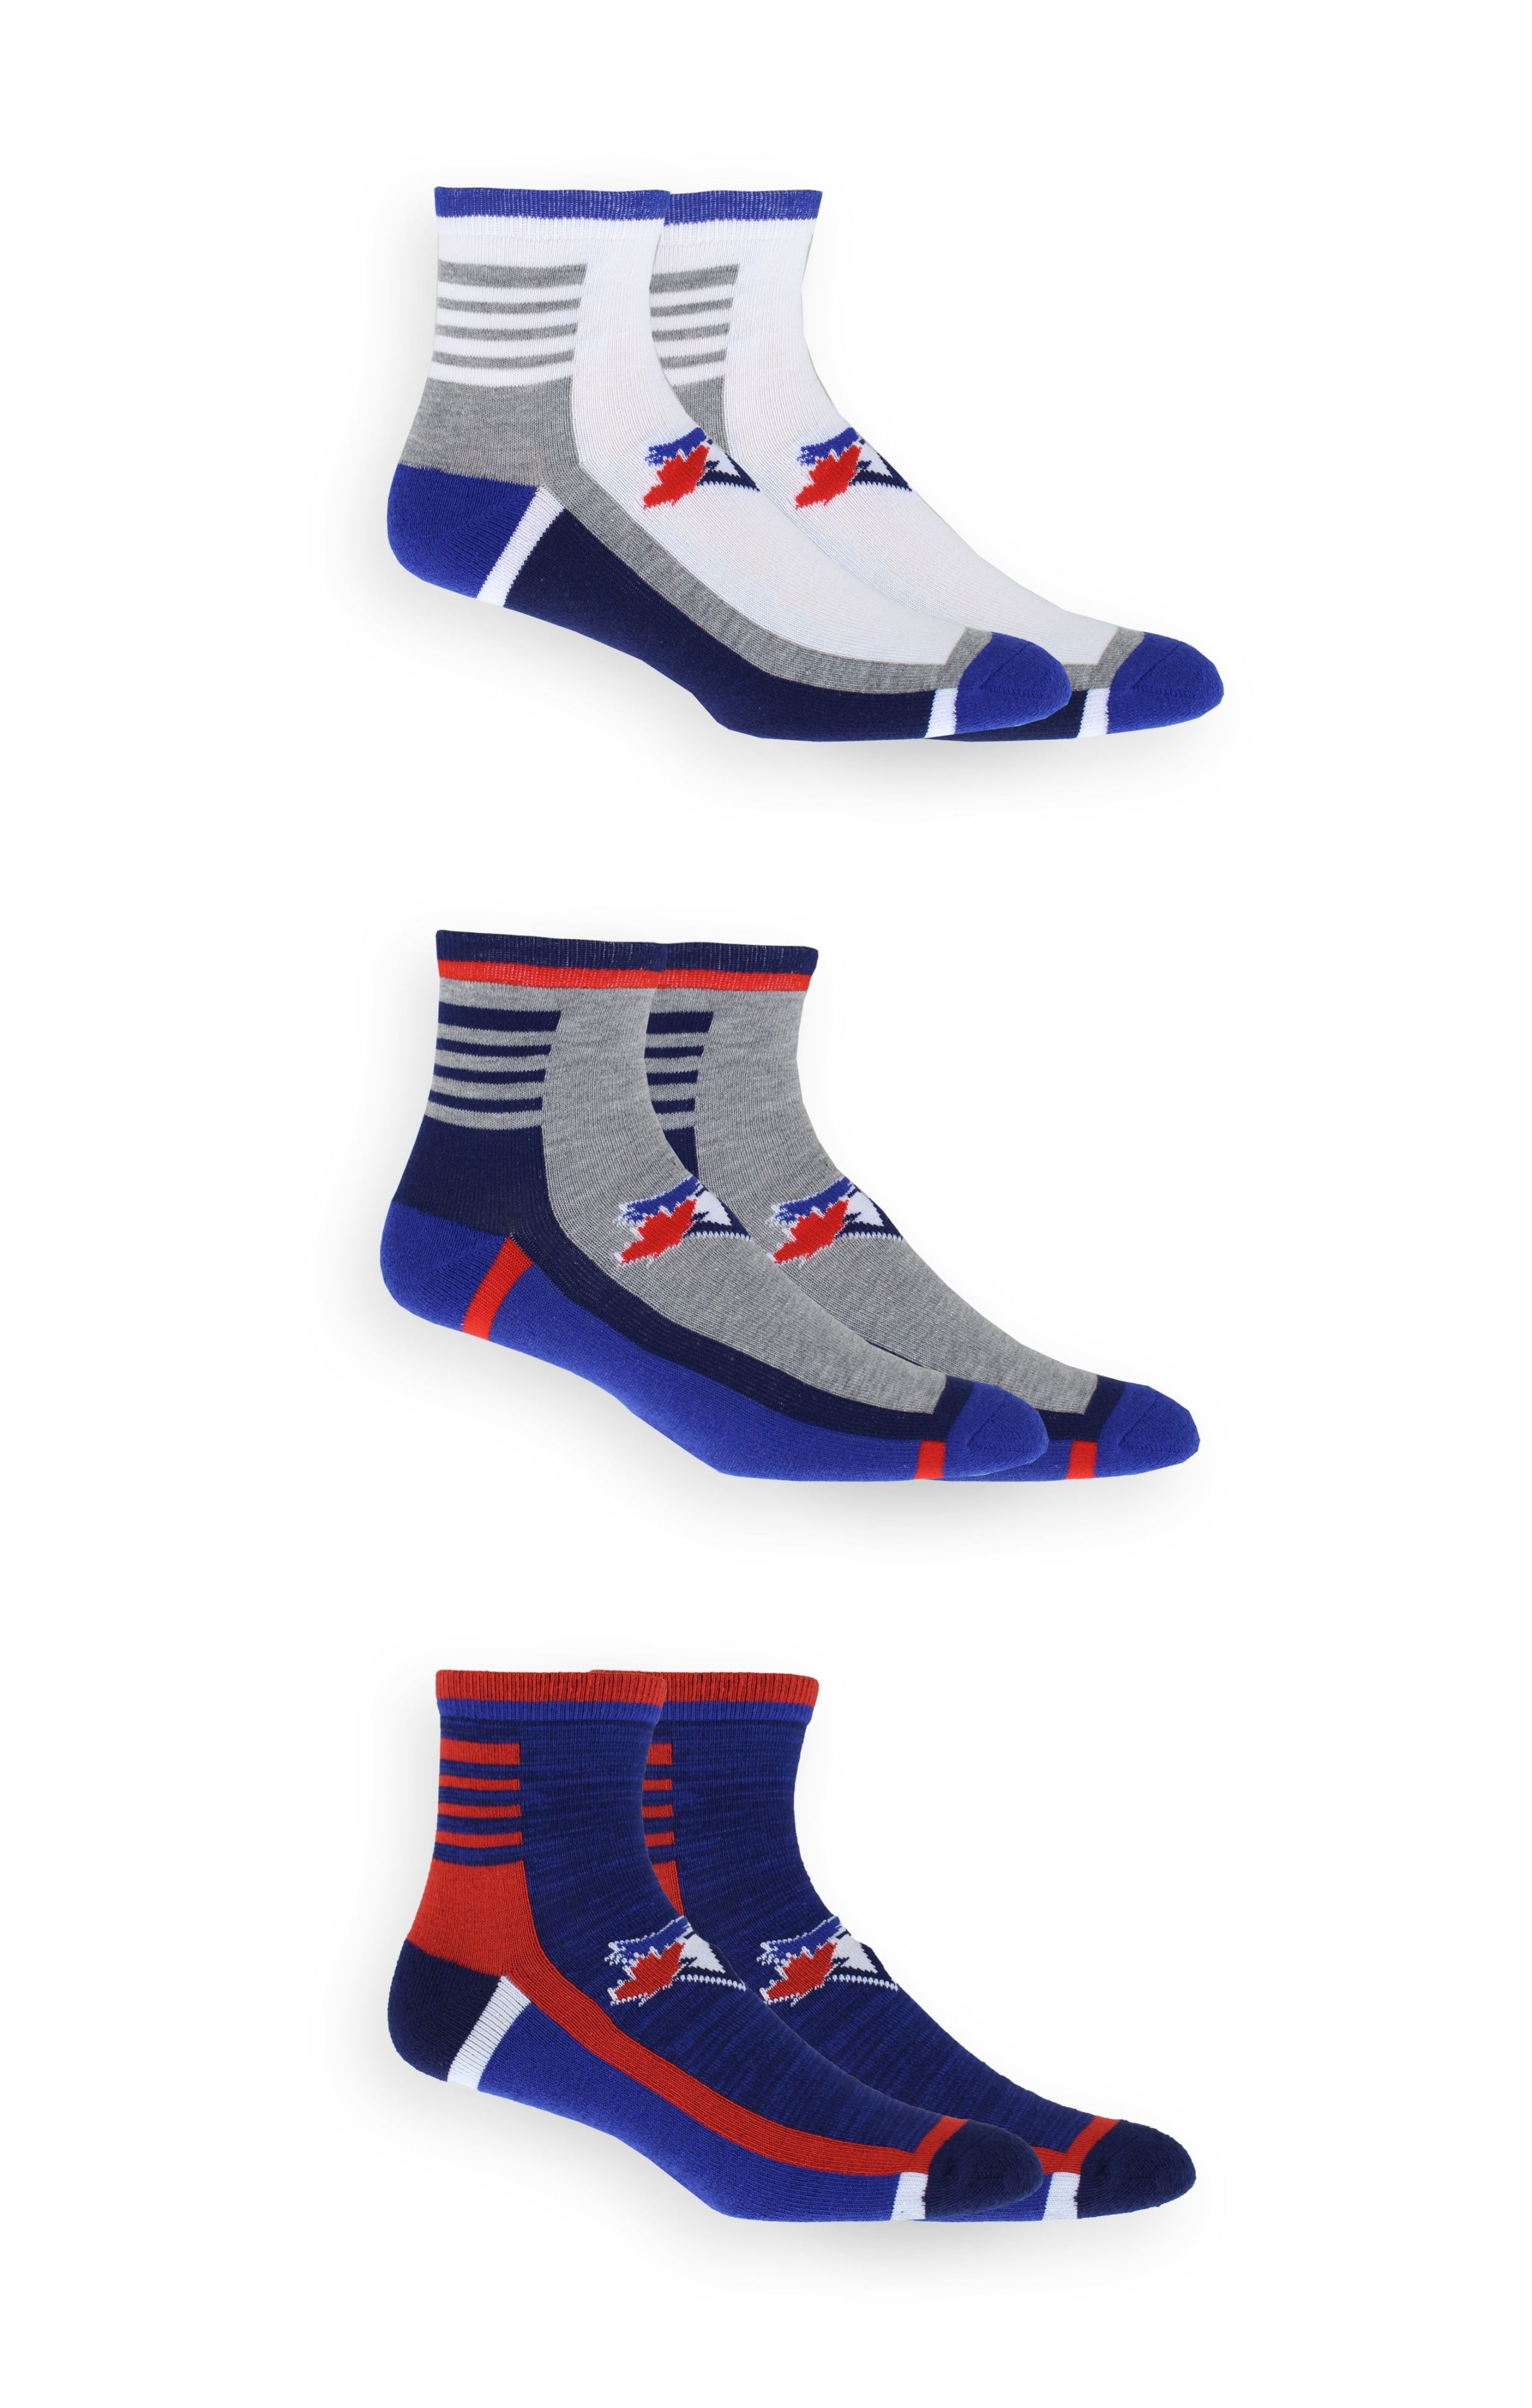 Gertex Toronto Blue Jays Socks Quarter Length 3 Pack Mens Shoe Size 7-13